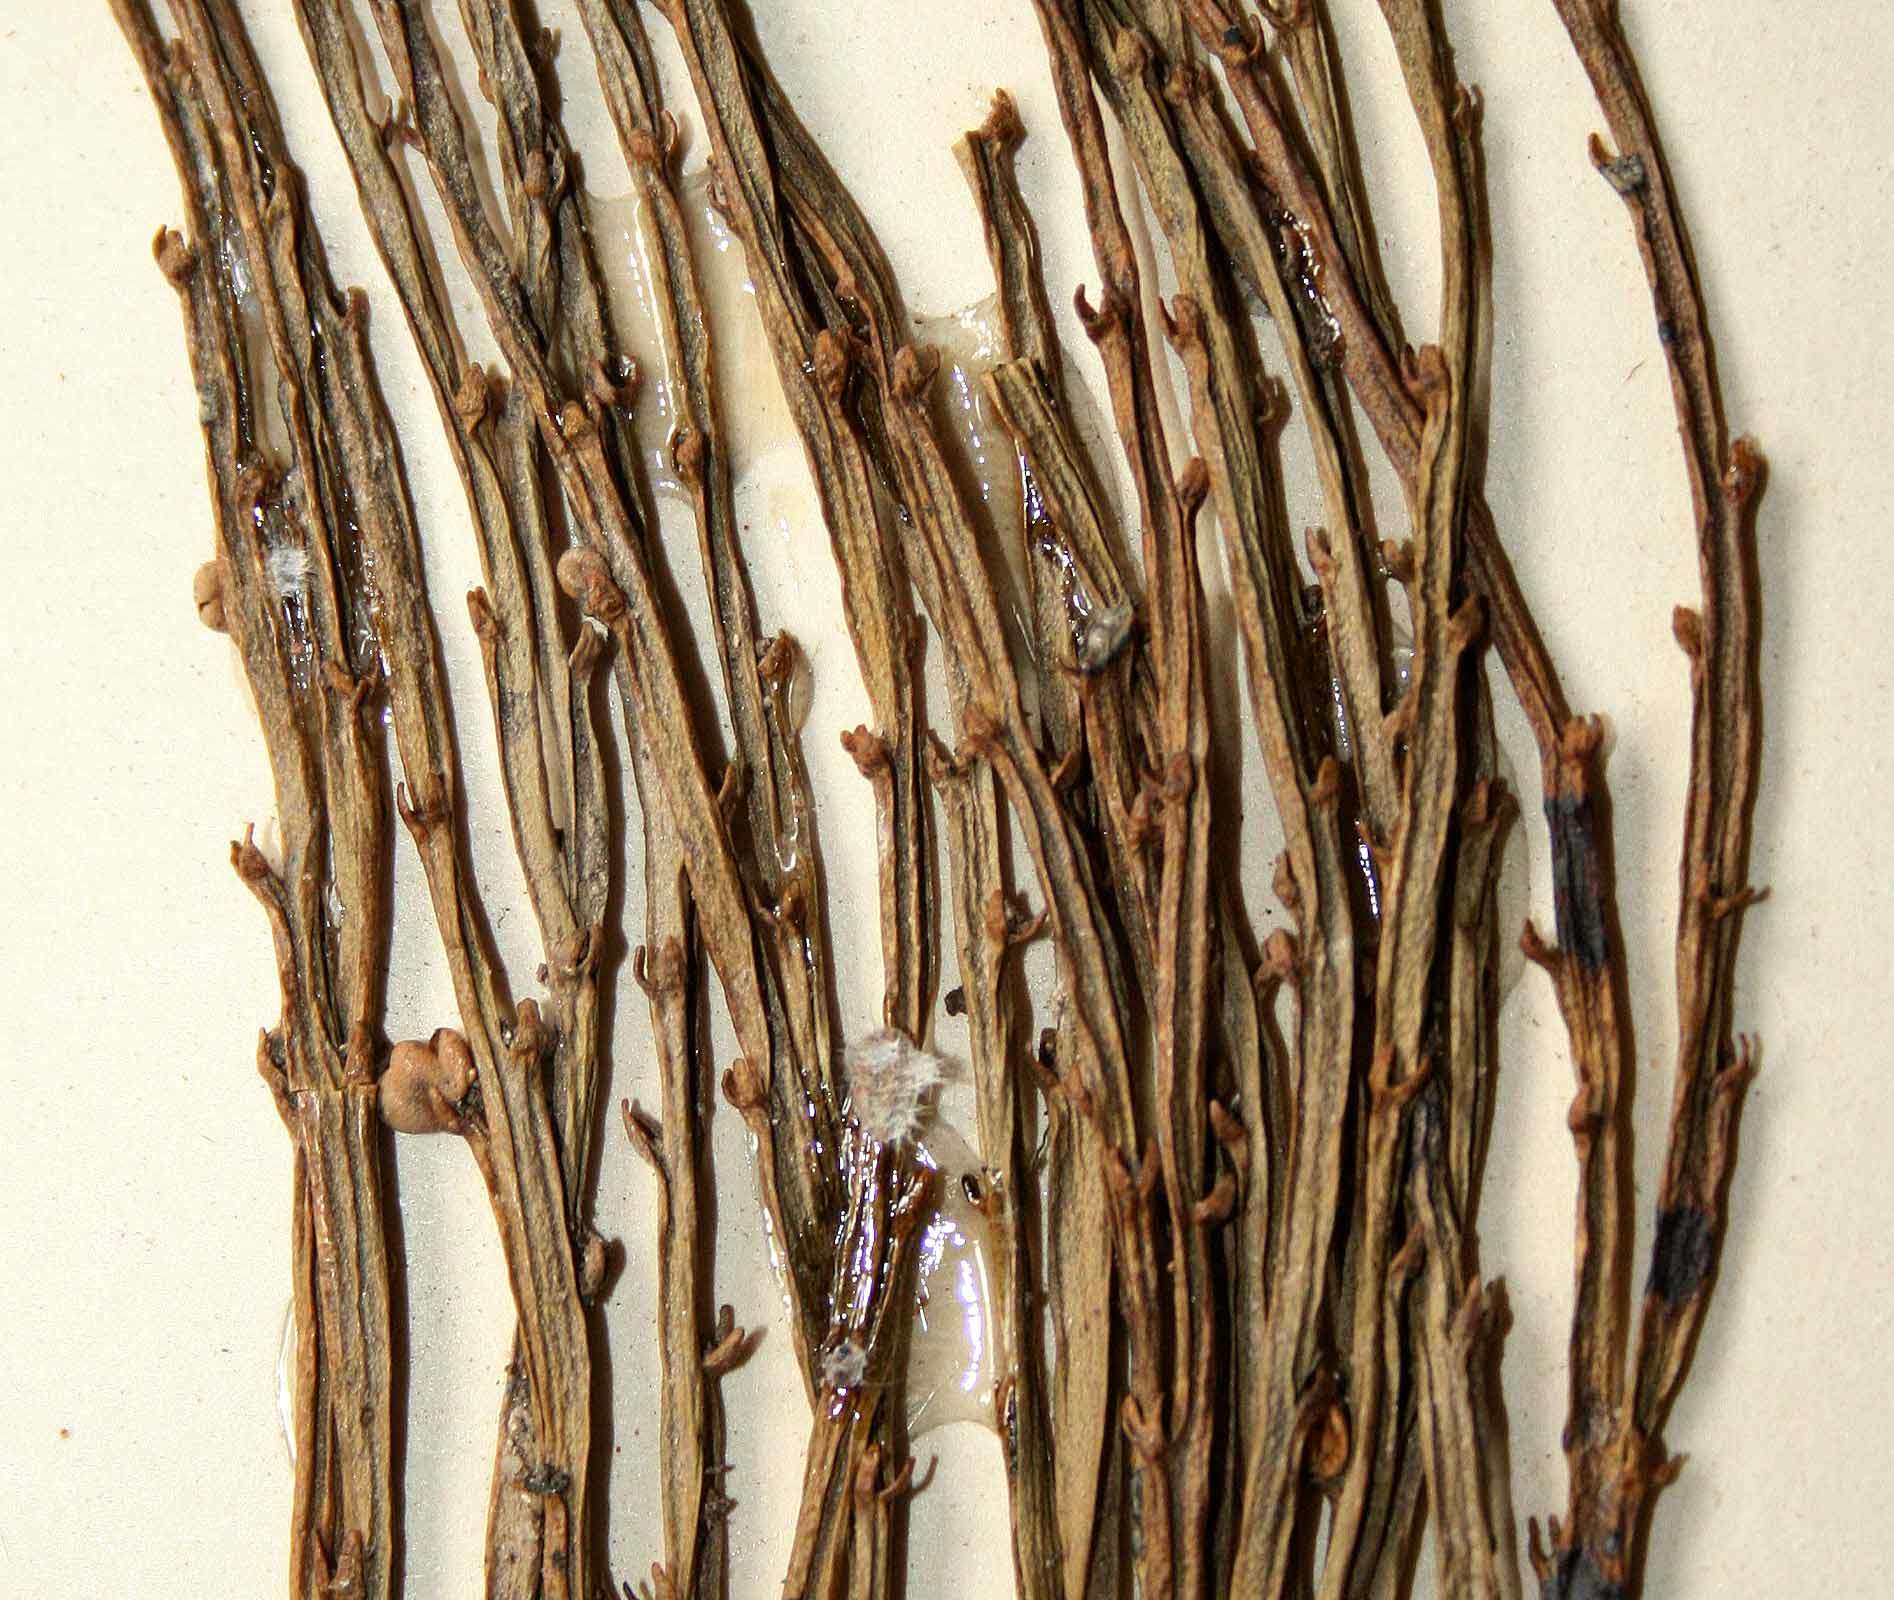 Image of Whisk Ferns